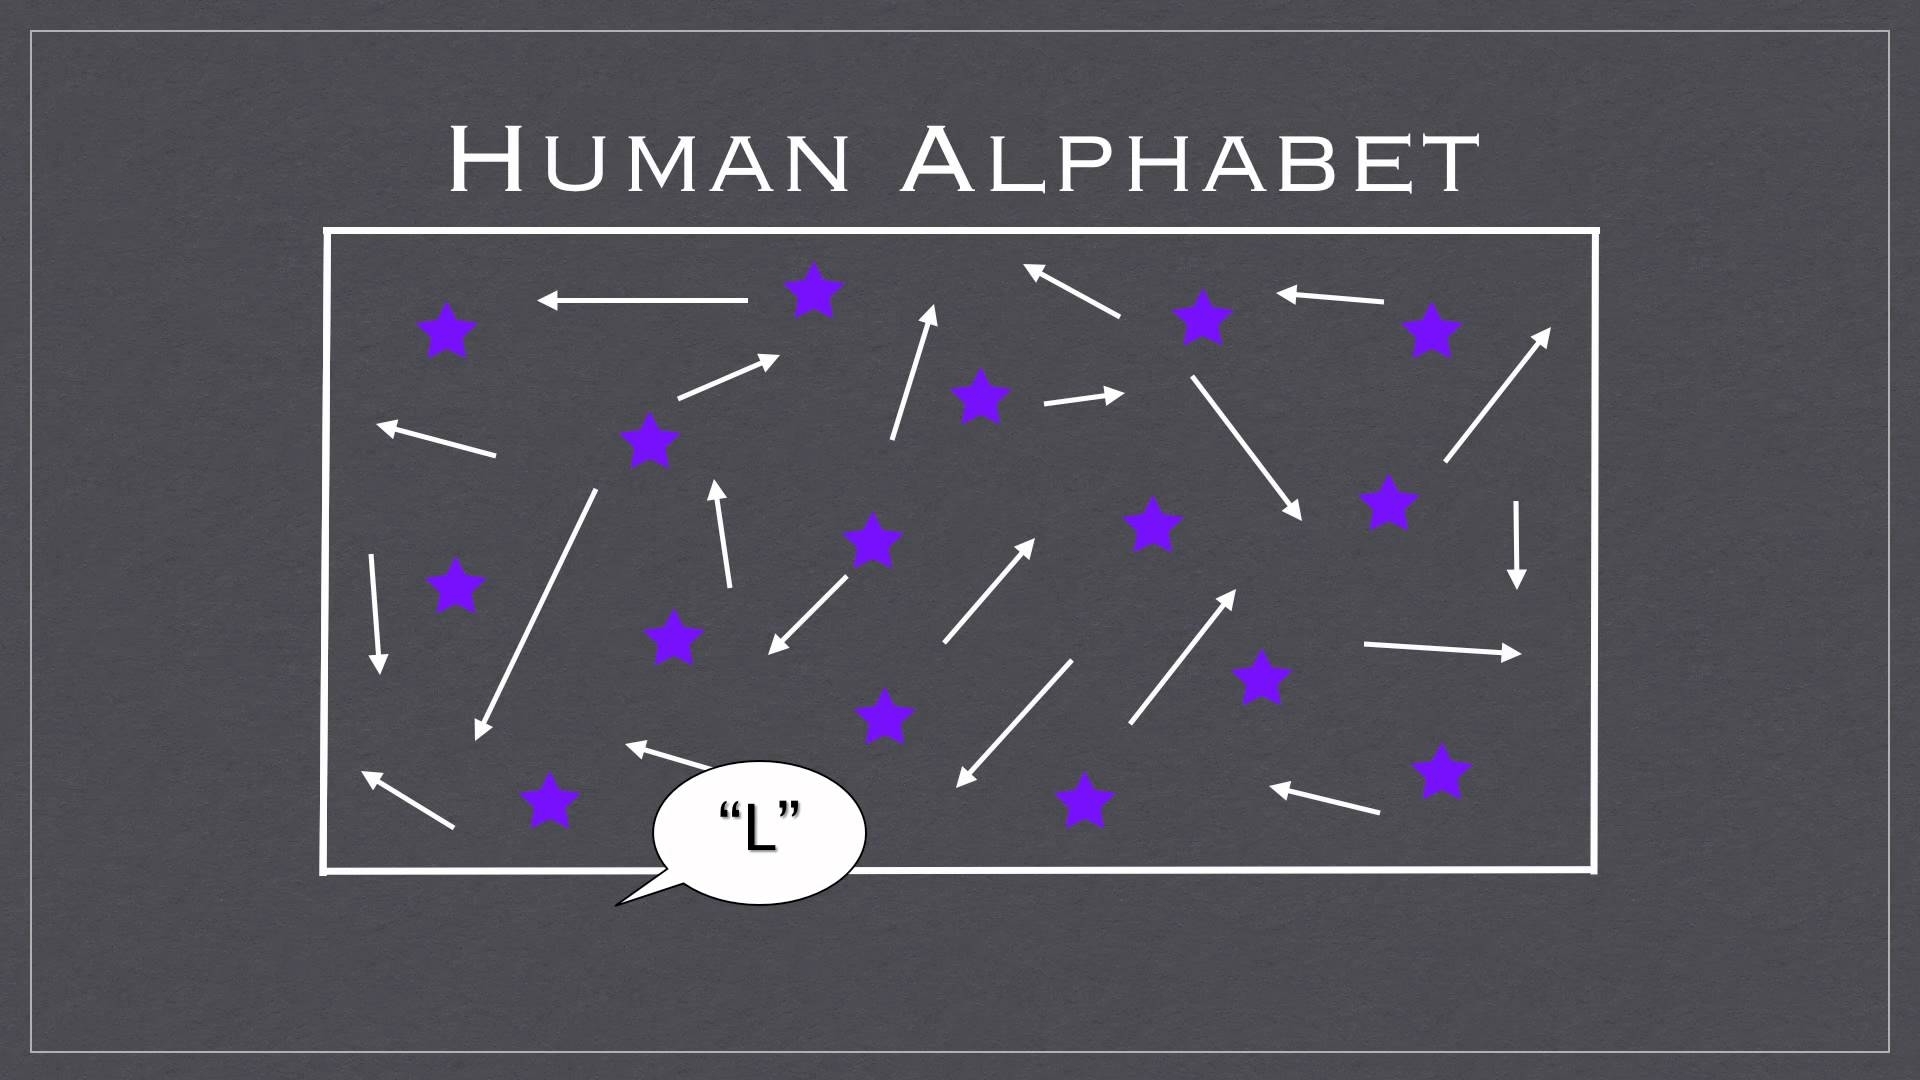 Human Alphabet by Physed Games || www.recgympros.com || @recgympros